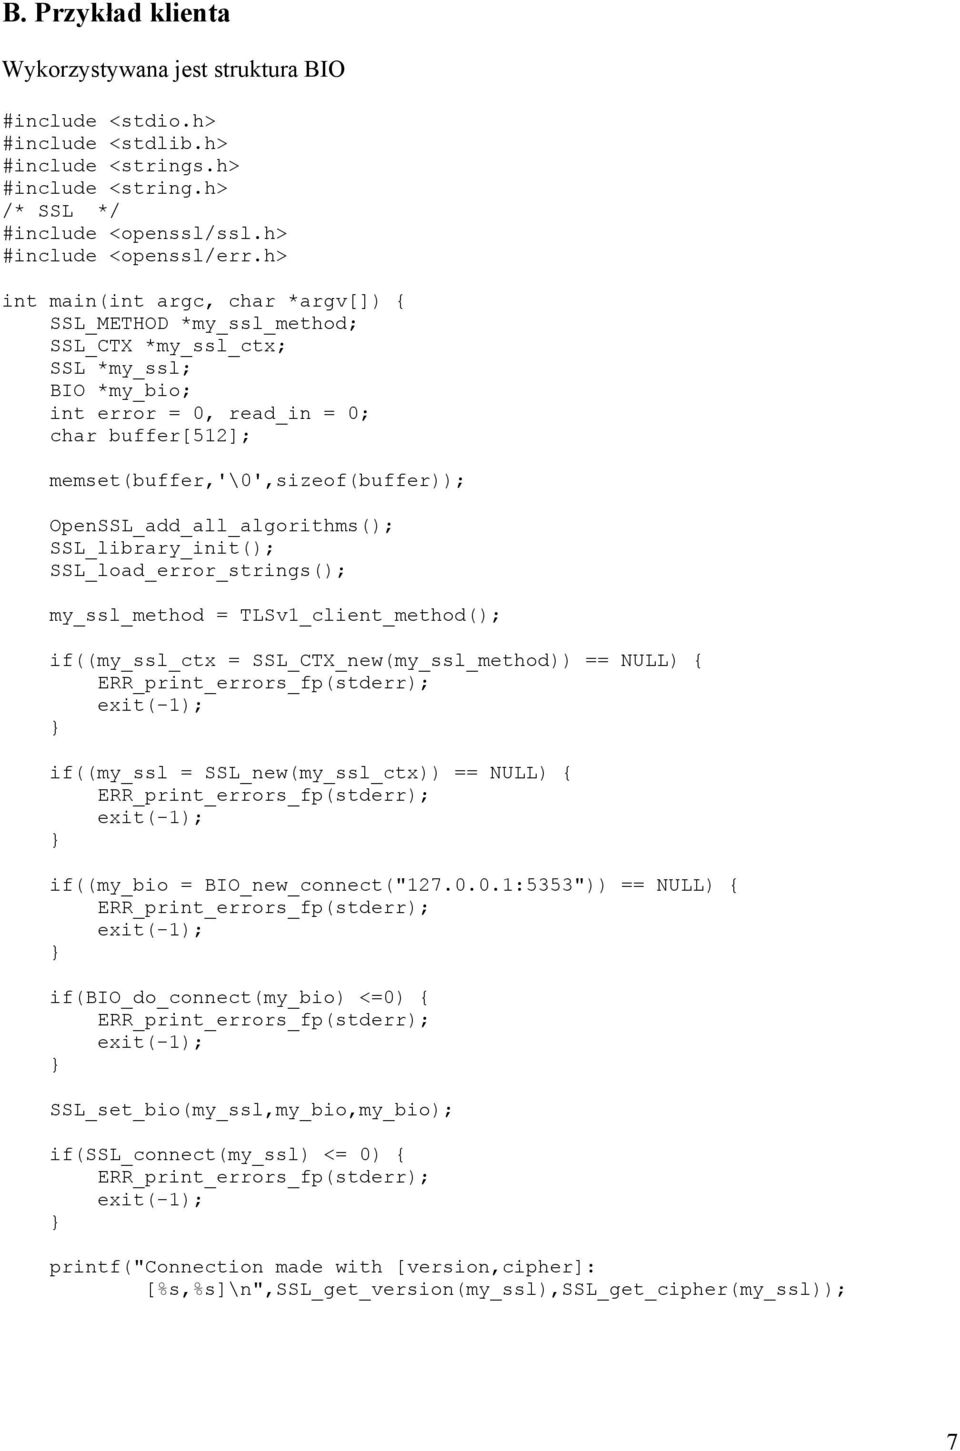 my_ssl_method = TLSv1_client_method(); if((my_ssl_ctx = SSL_CTX_new(my_ssl_method)) == NULL) { if((my_ssl = SSL_new(my_ssl_ctx)) == NULL) { if((my_bio = BIO_new_connect("127.0.